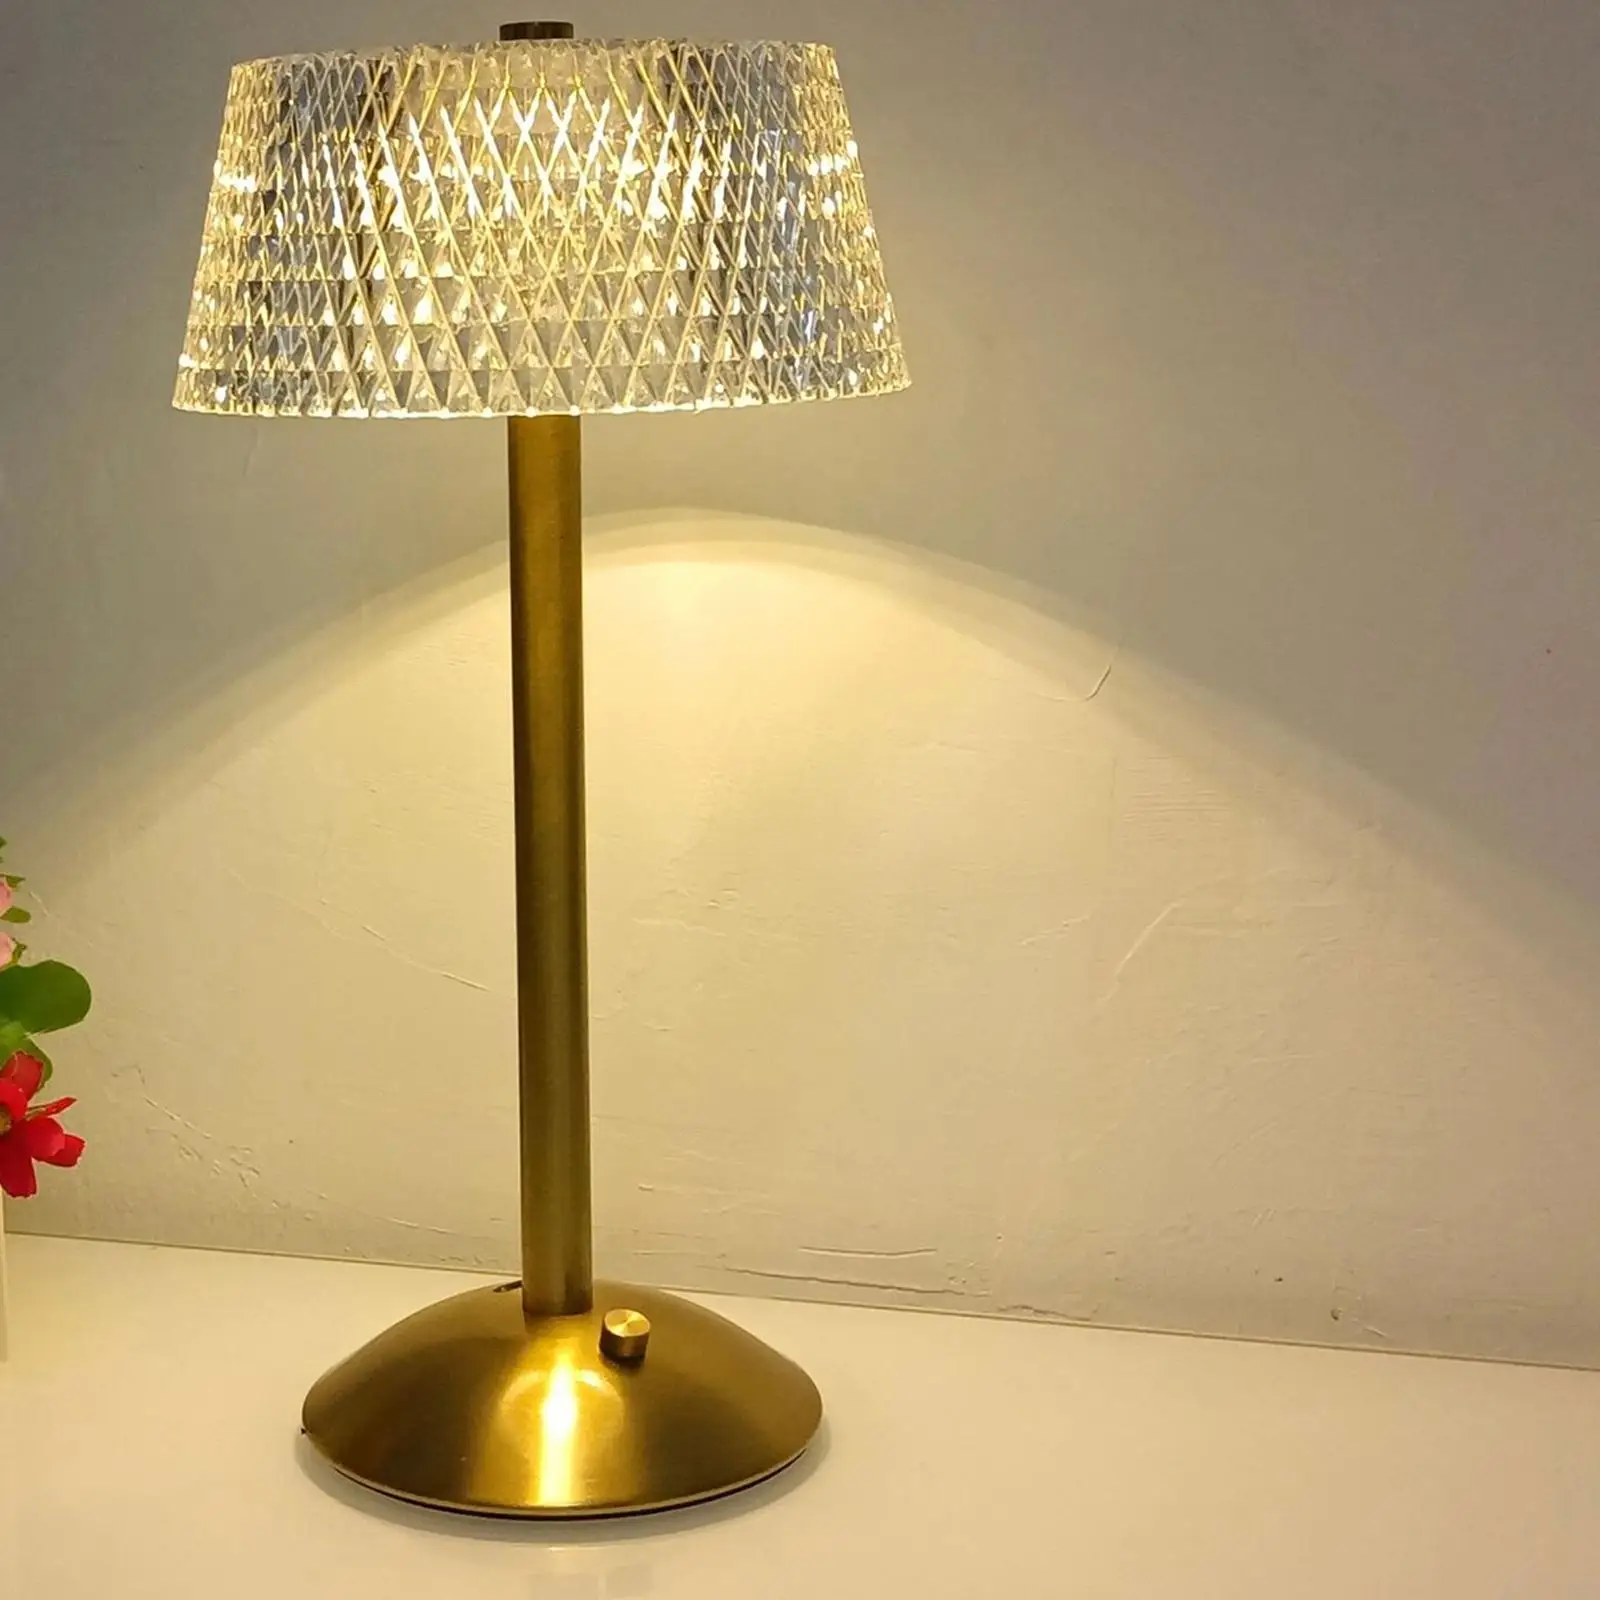 Modern LED Cordless Table Lamp Light Adjustable Eye Protection Rechargeable Glass for Hotel Living Room Desk NightStand Decor